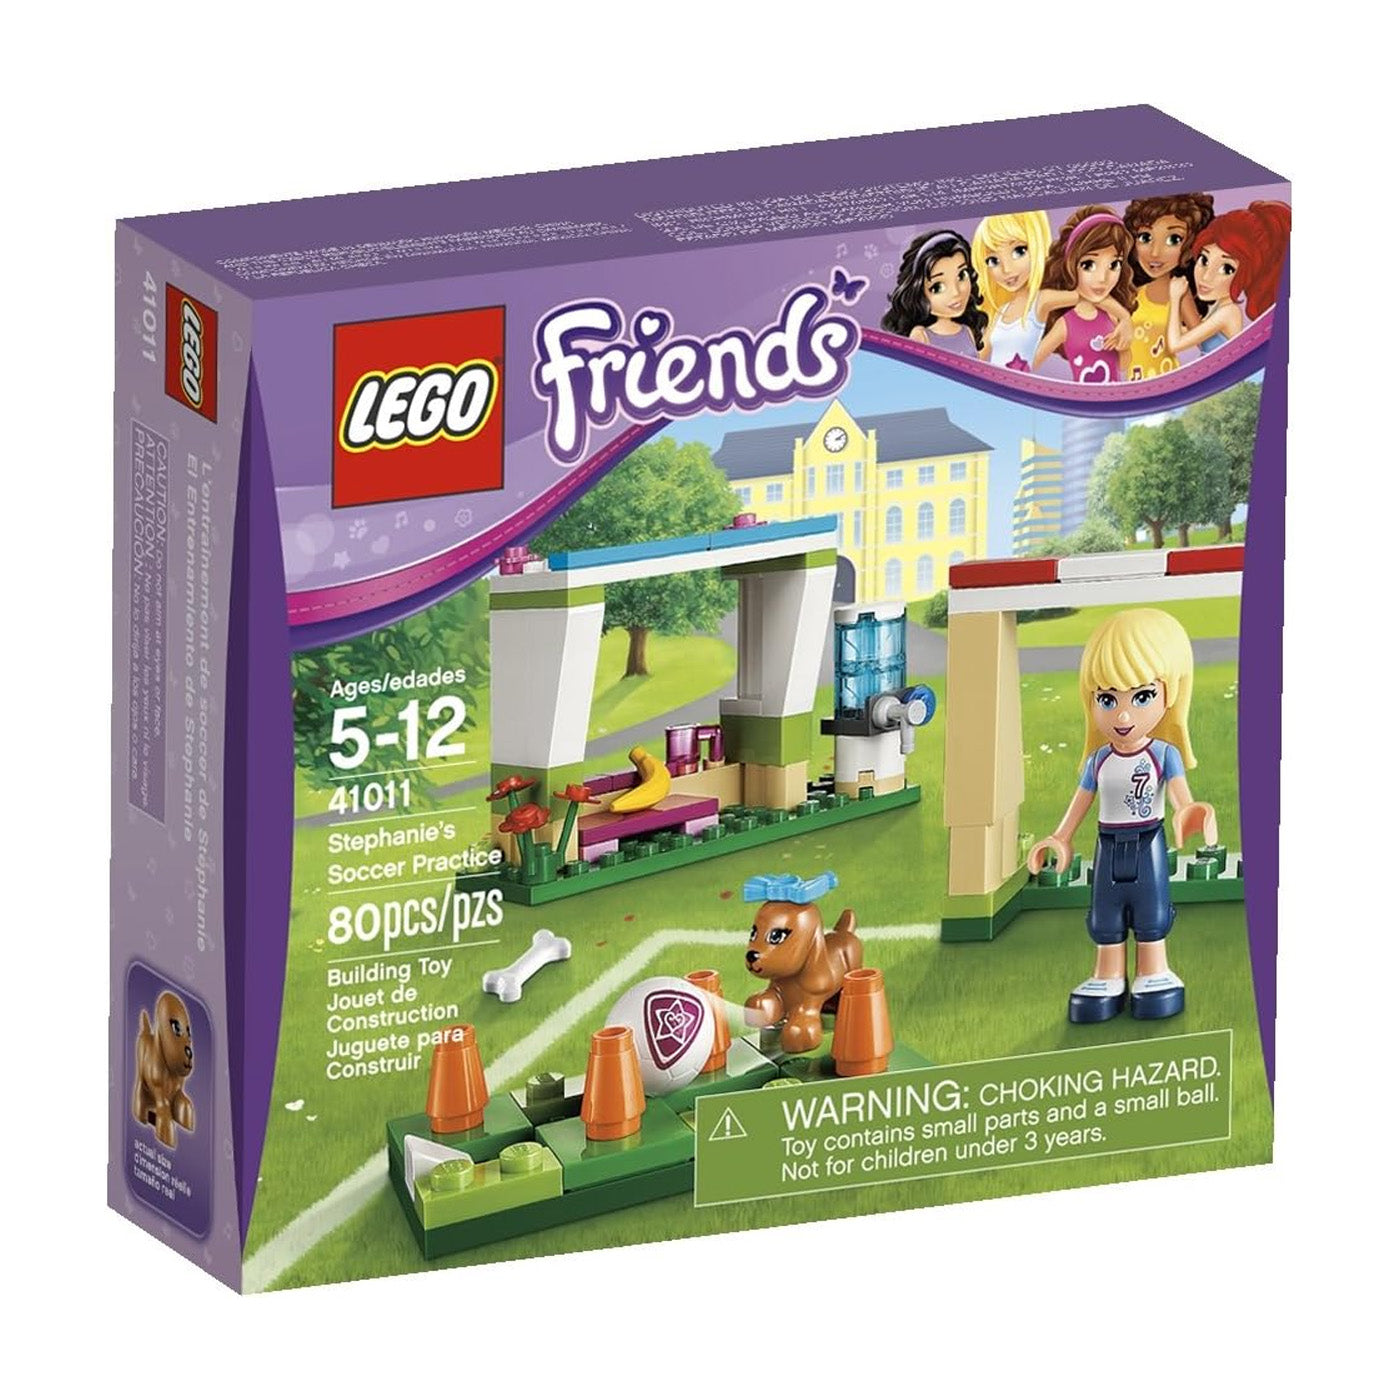 LEGO Friends: Stephanie's Soccer Practice Set 41011